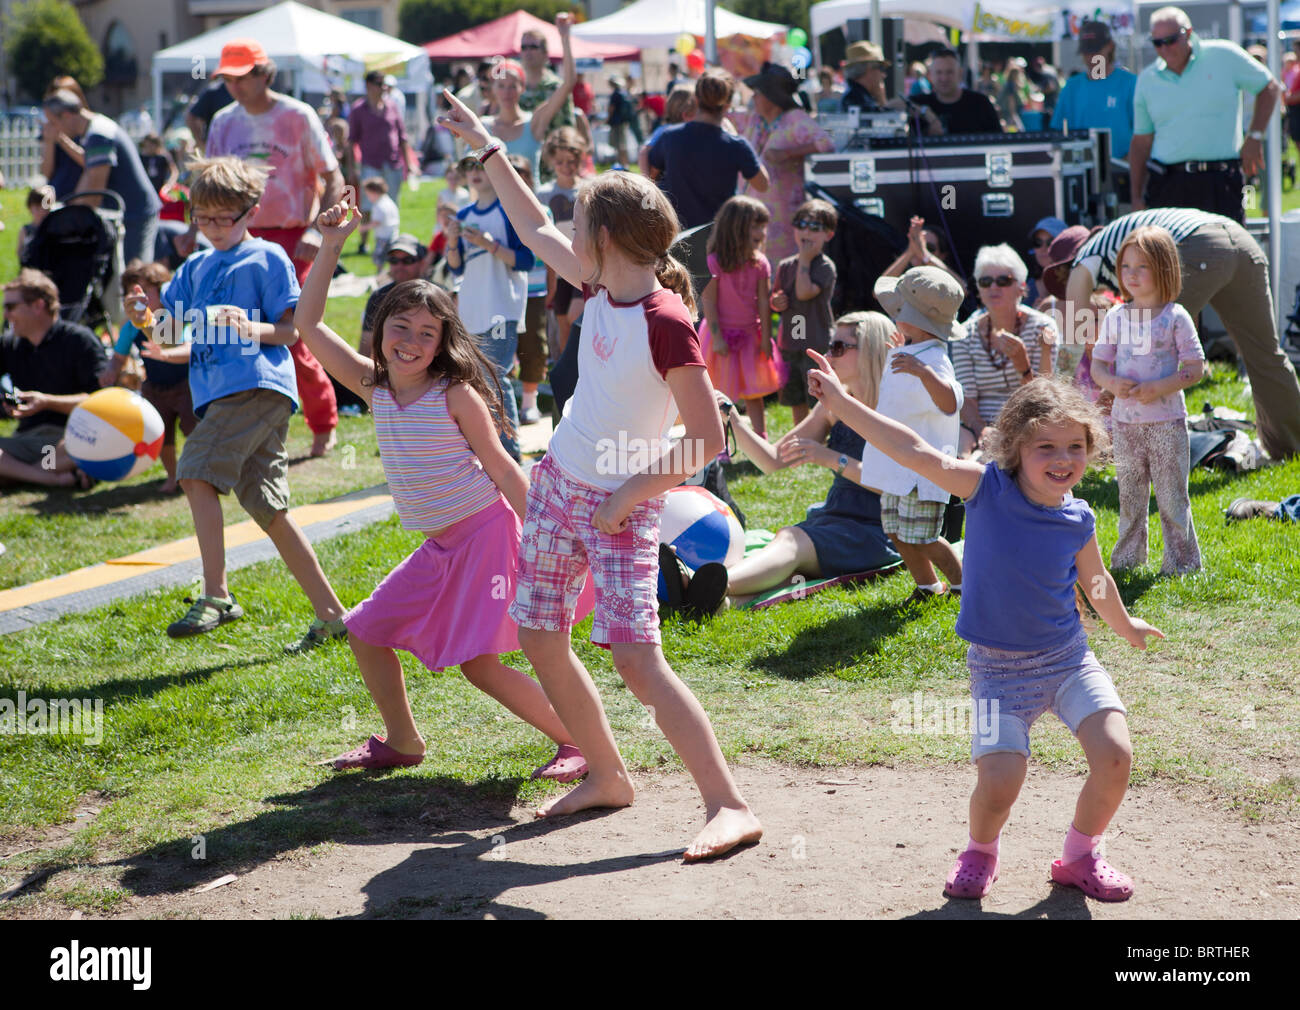 Children dance at an outdoor music festival Stock Photo